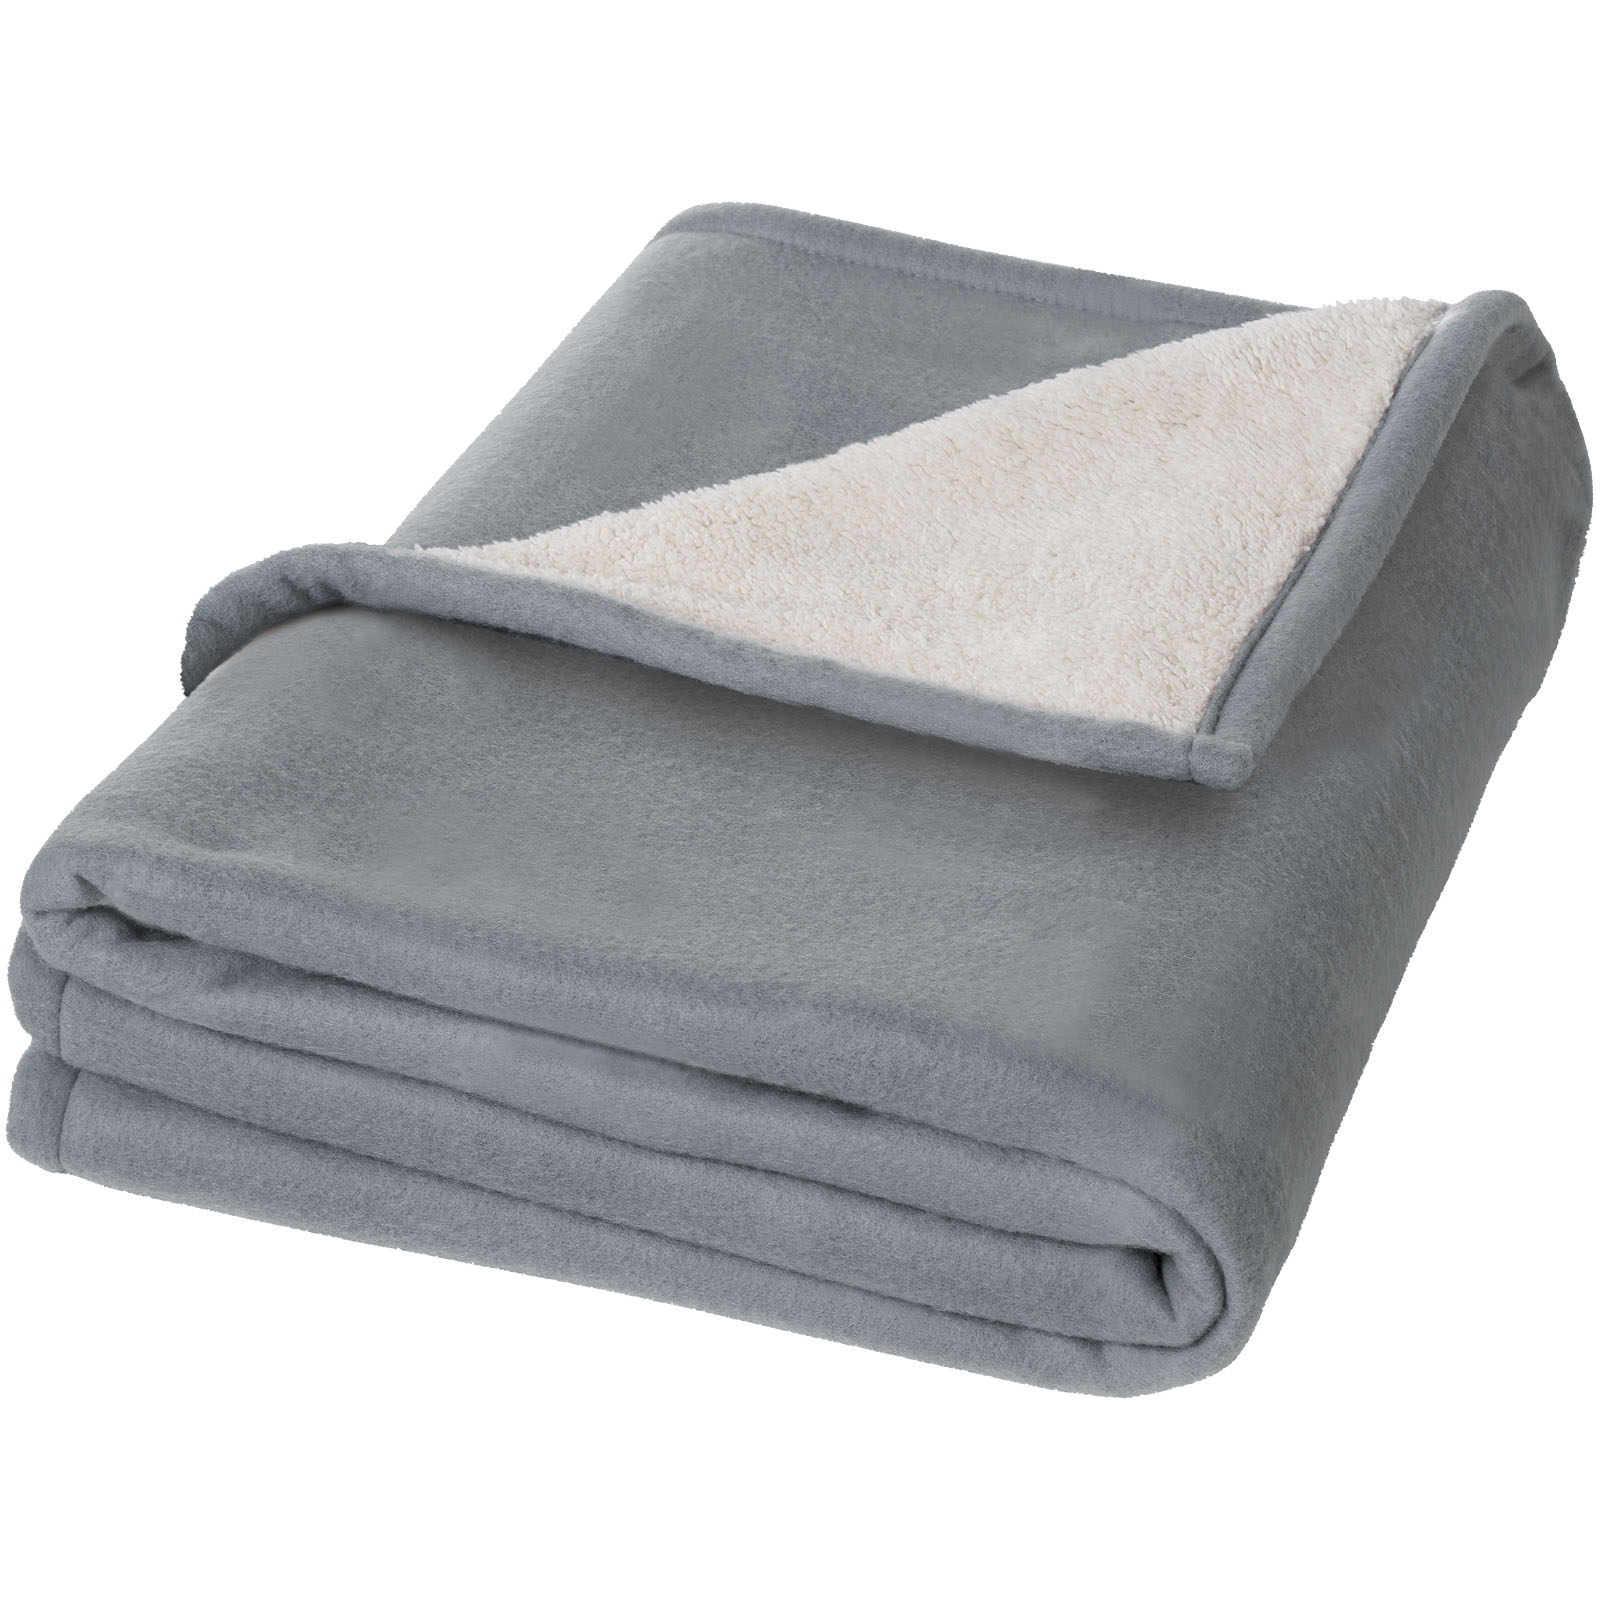 Home & Kitchen - Springwood soft fleece and sherpa plaid blanket